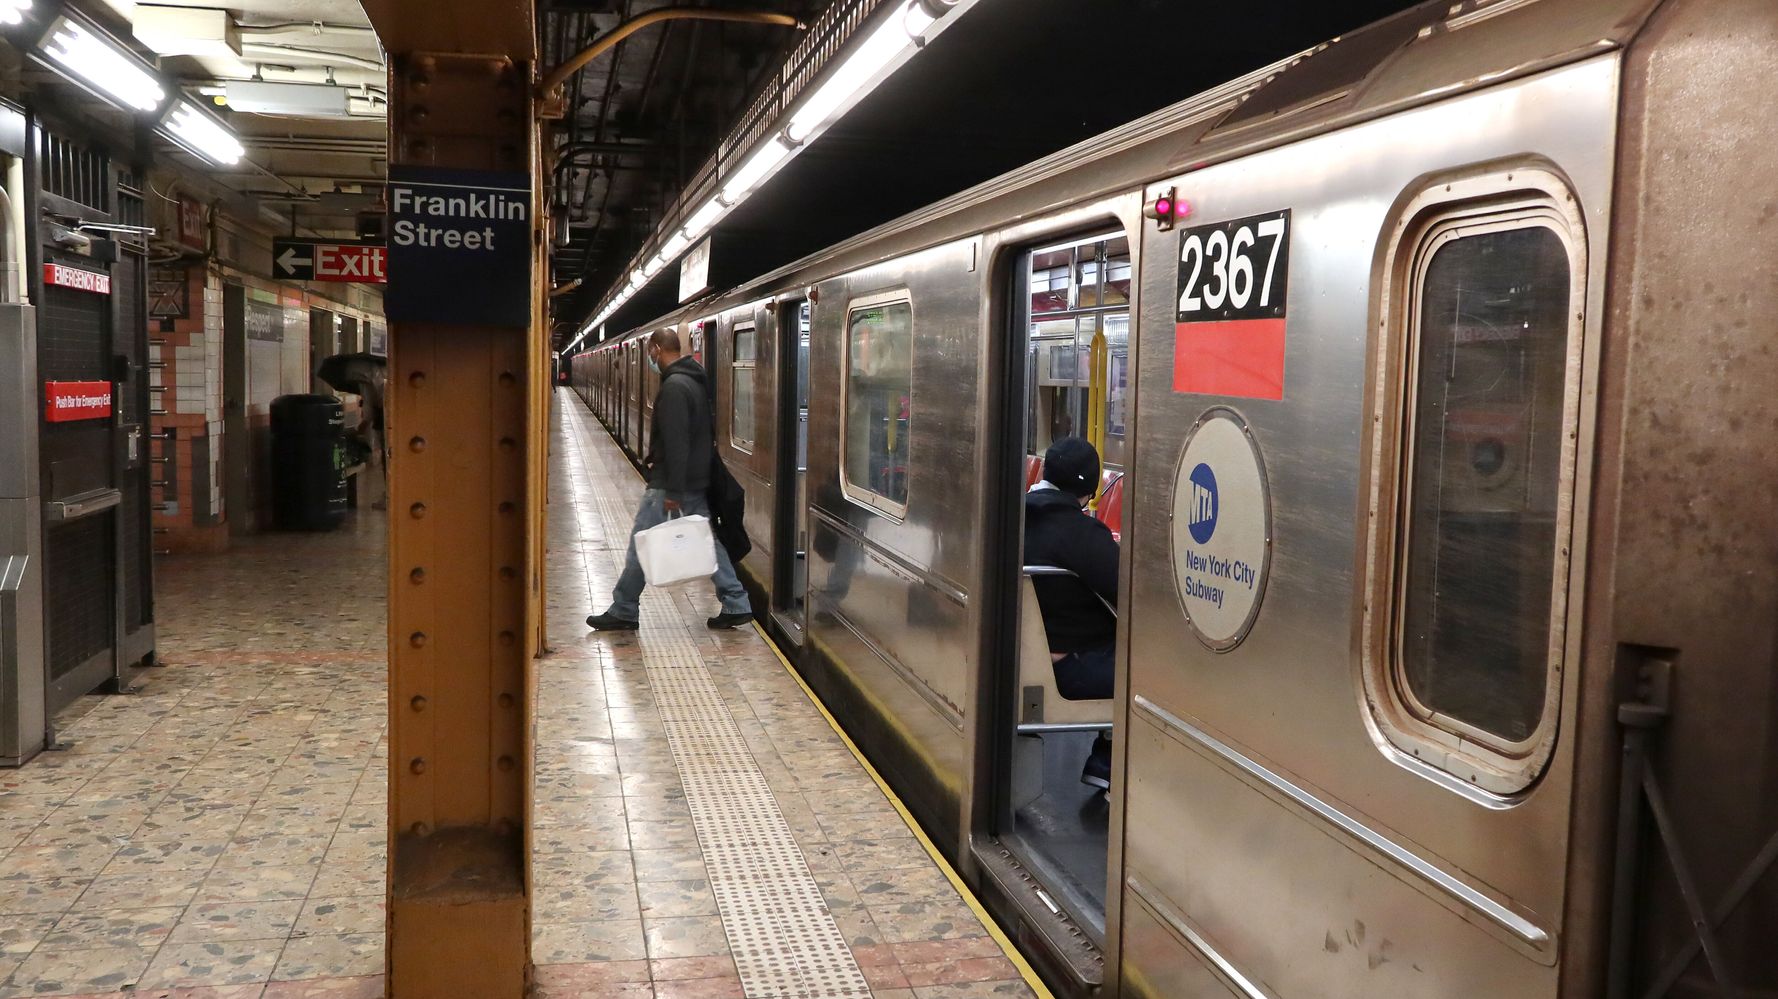 Man Dies After Train Doors Trap Pants And Drag Him Along Tracks